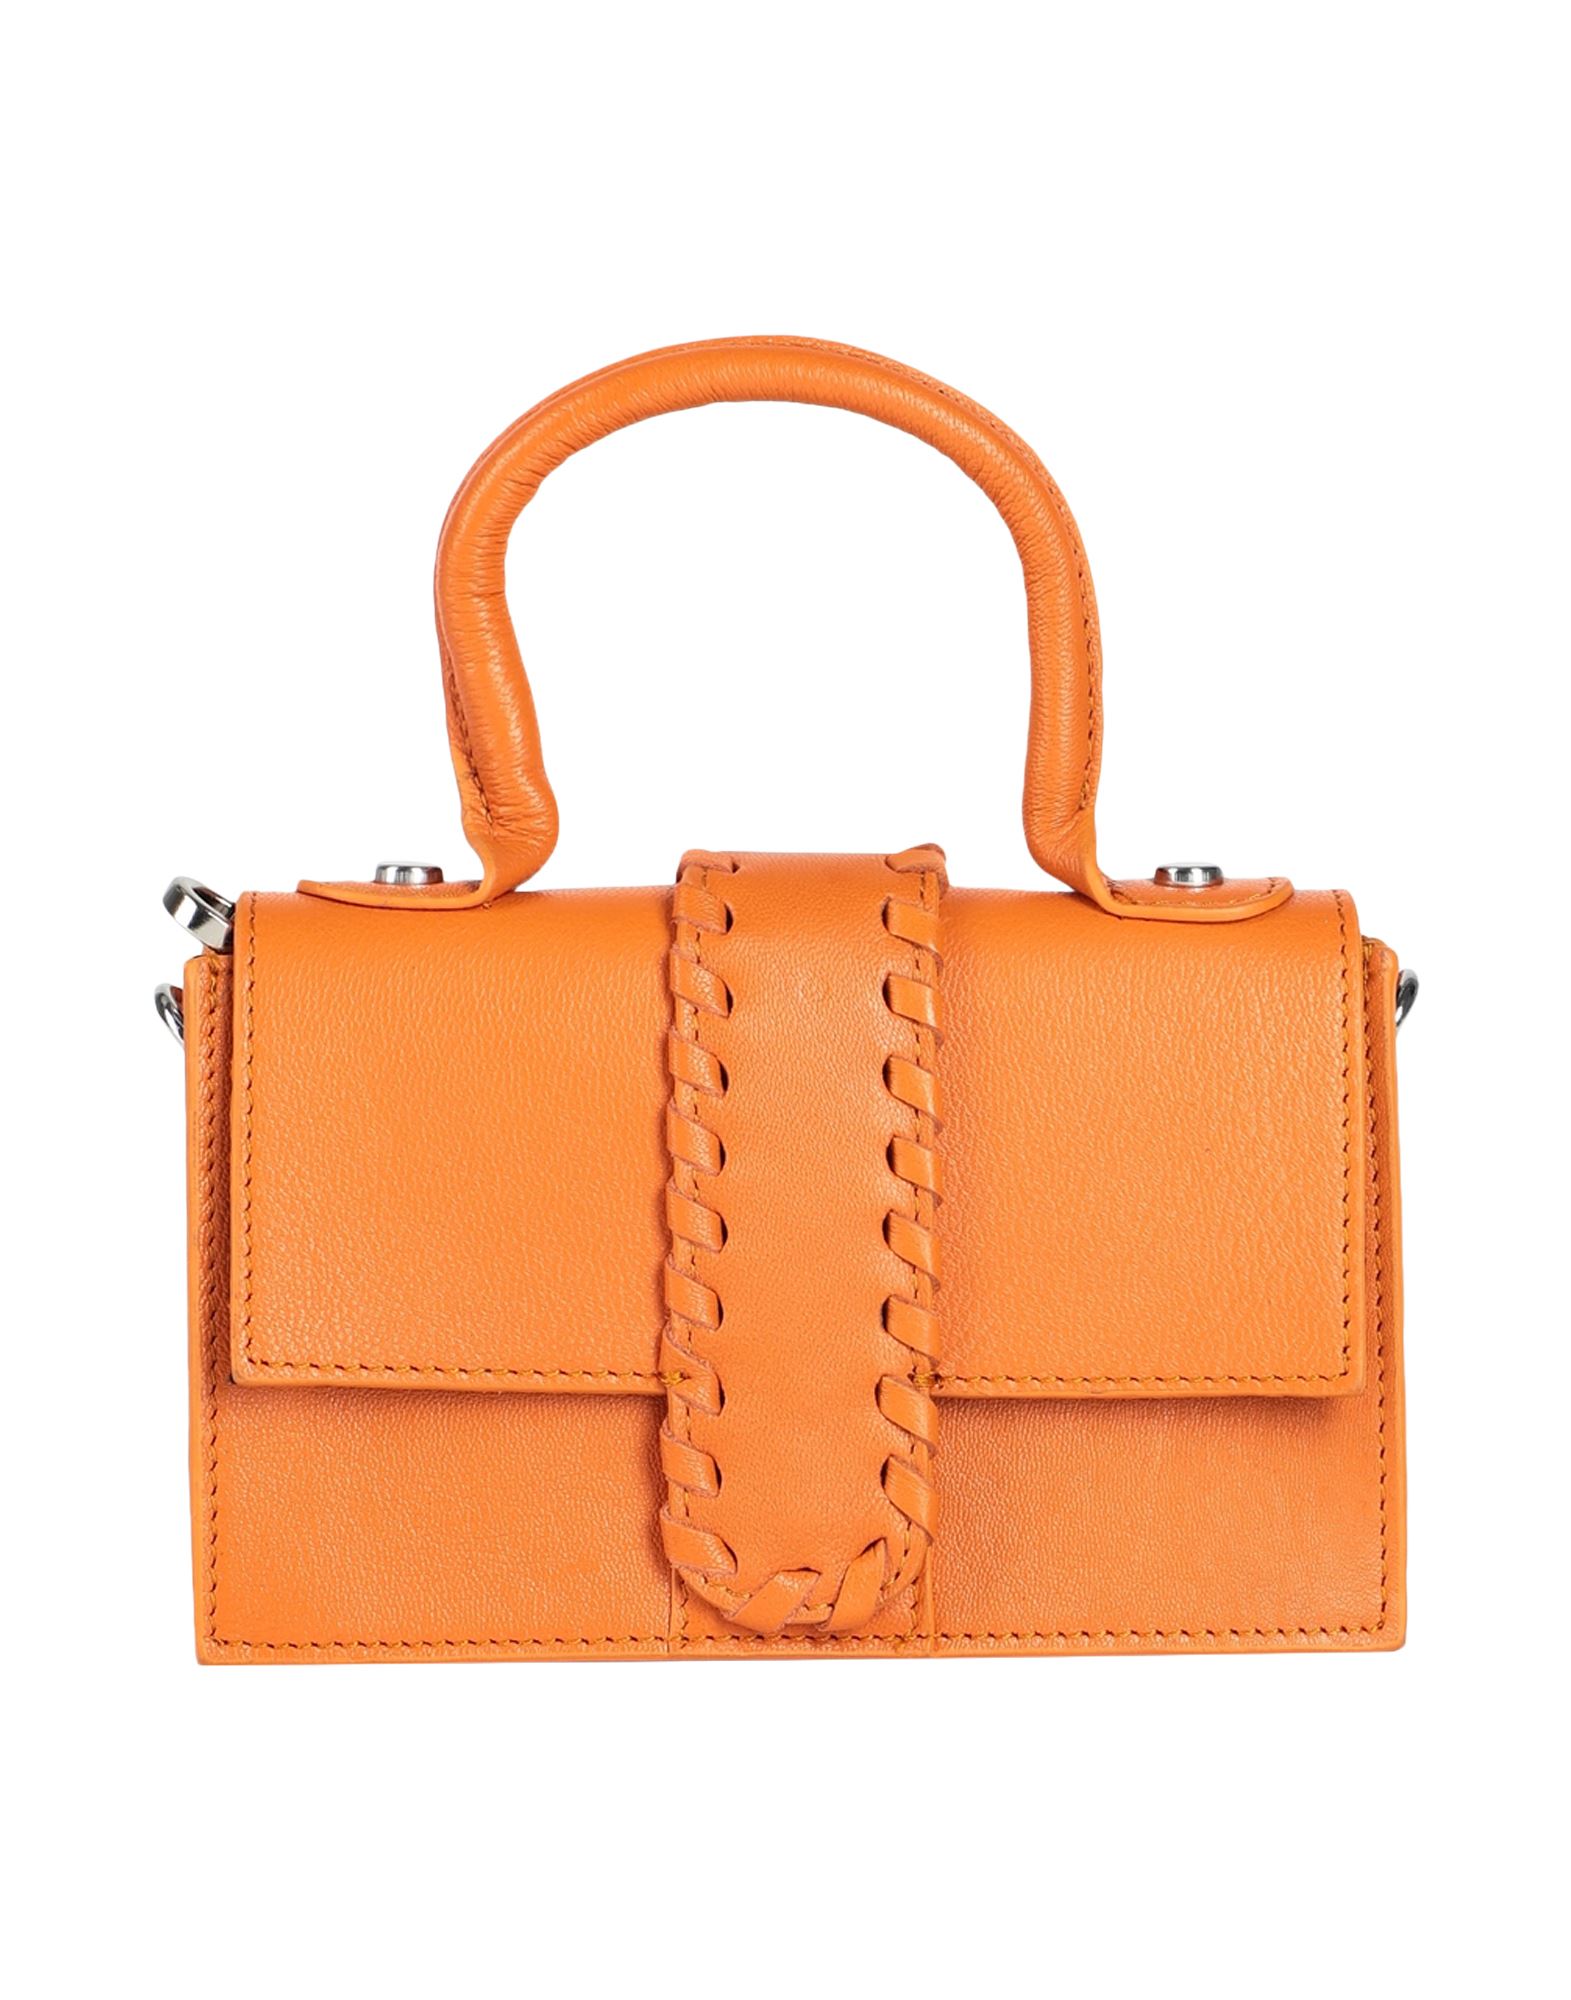 Topshop Handbags In Orange